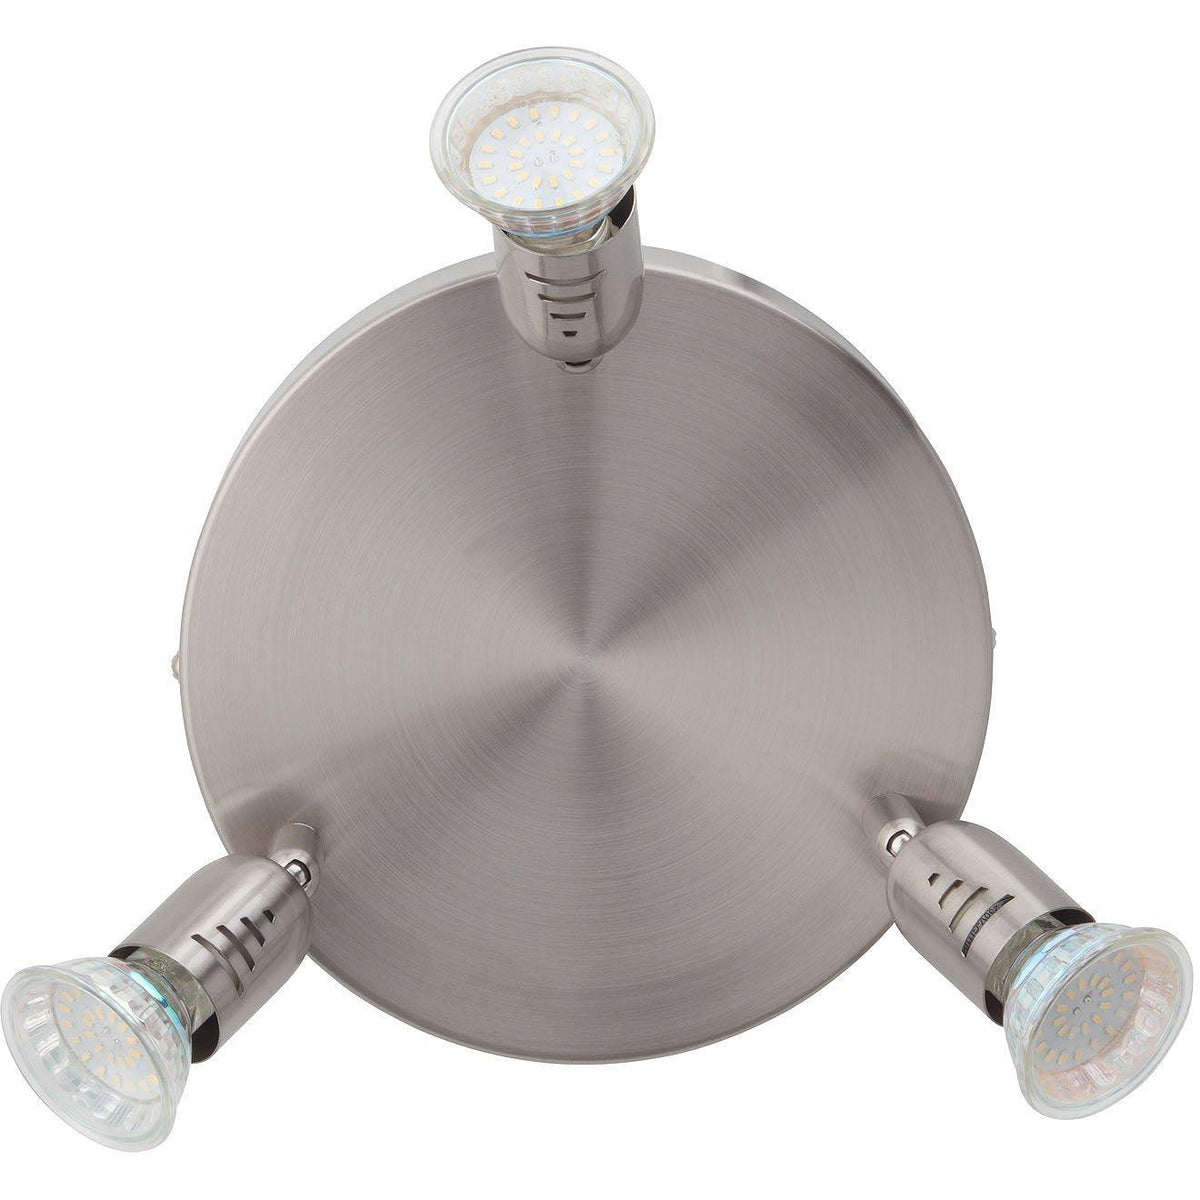 Brilliant 3 Light 6W Loona LED Spotlight - Iron | G28834/13 from DID Electrical - guaranteed Irish, guaranteed quality service. (6977594425532)